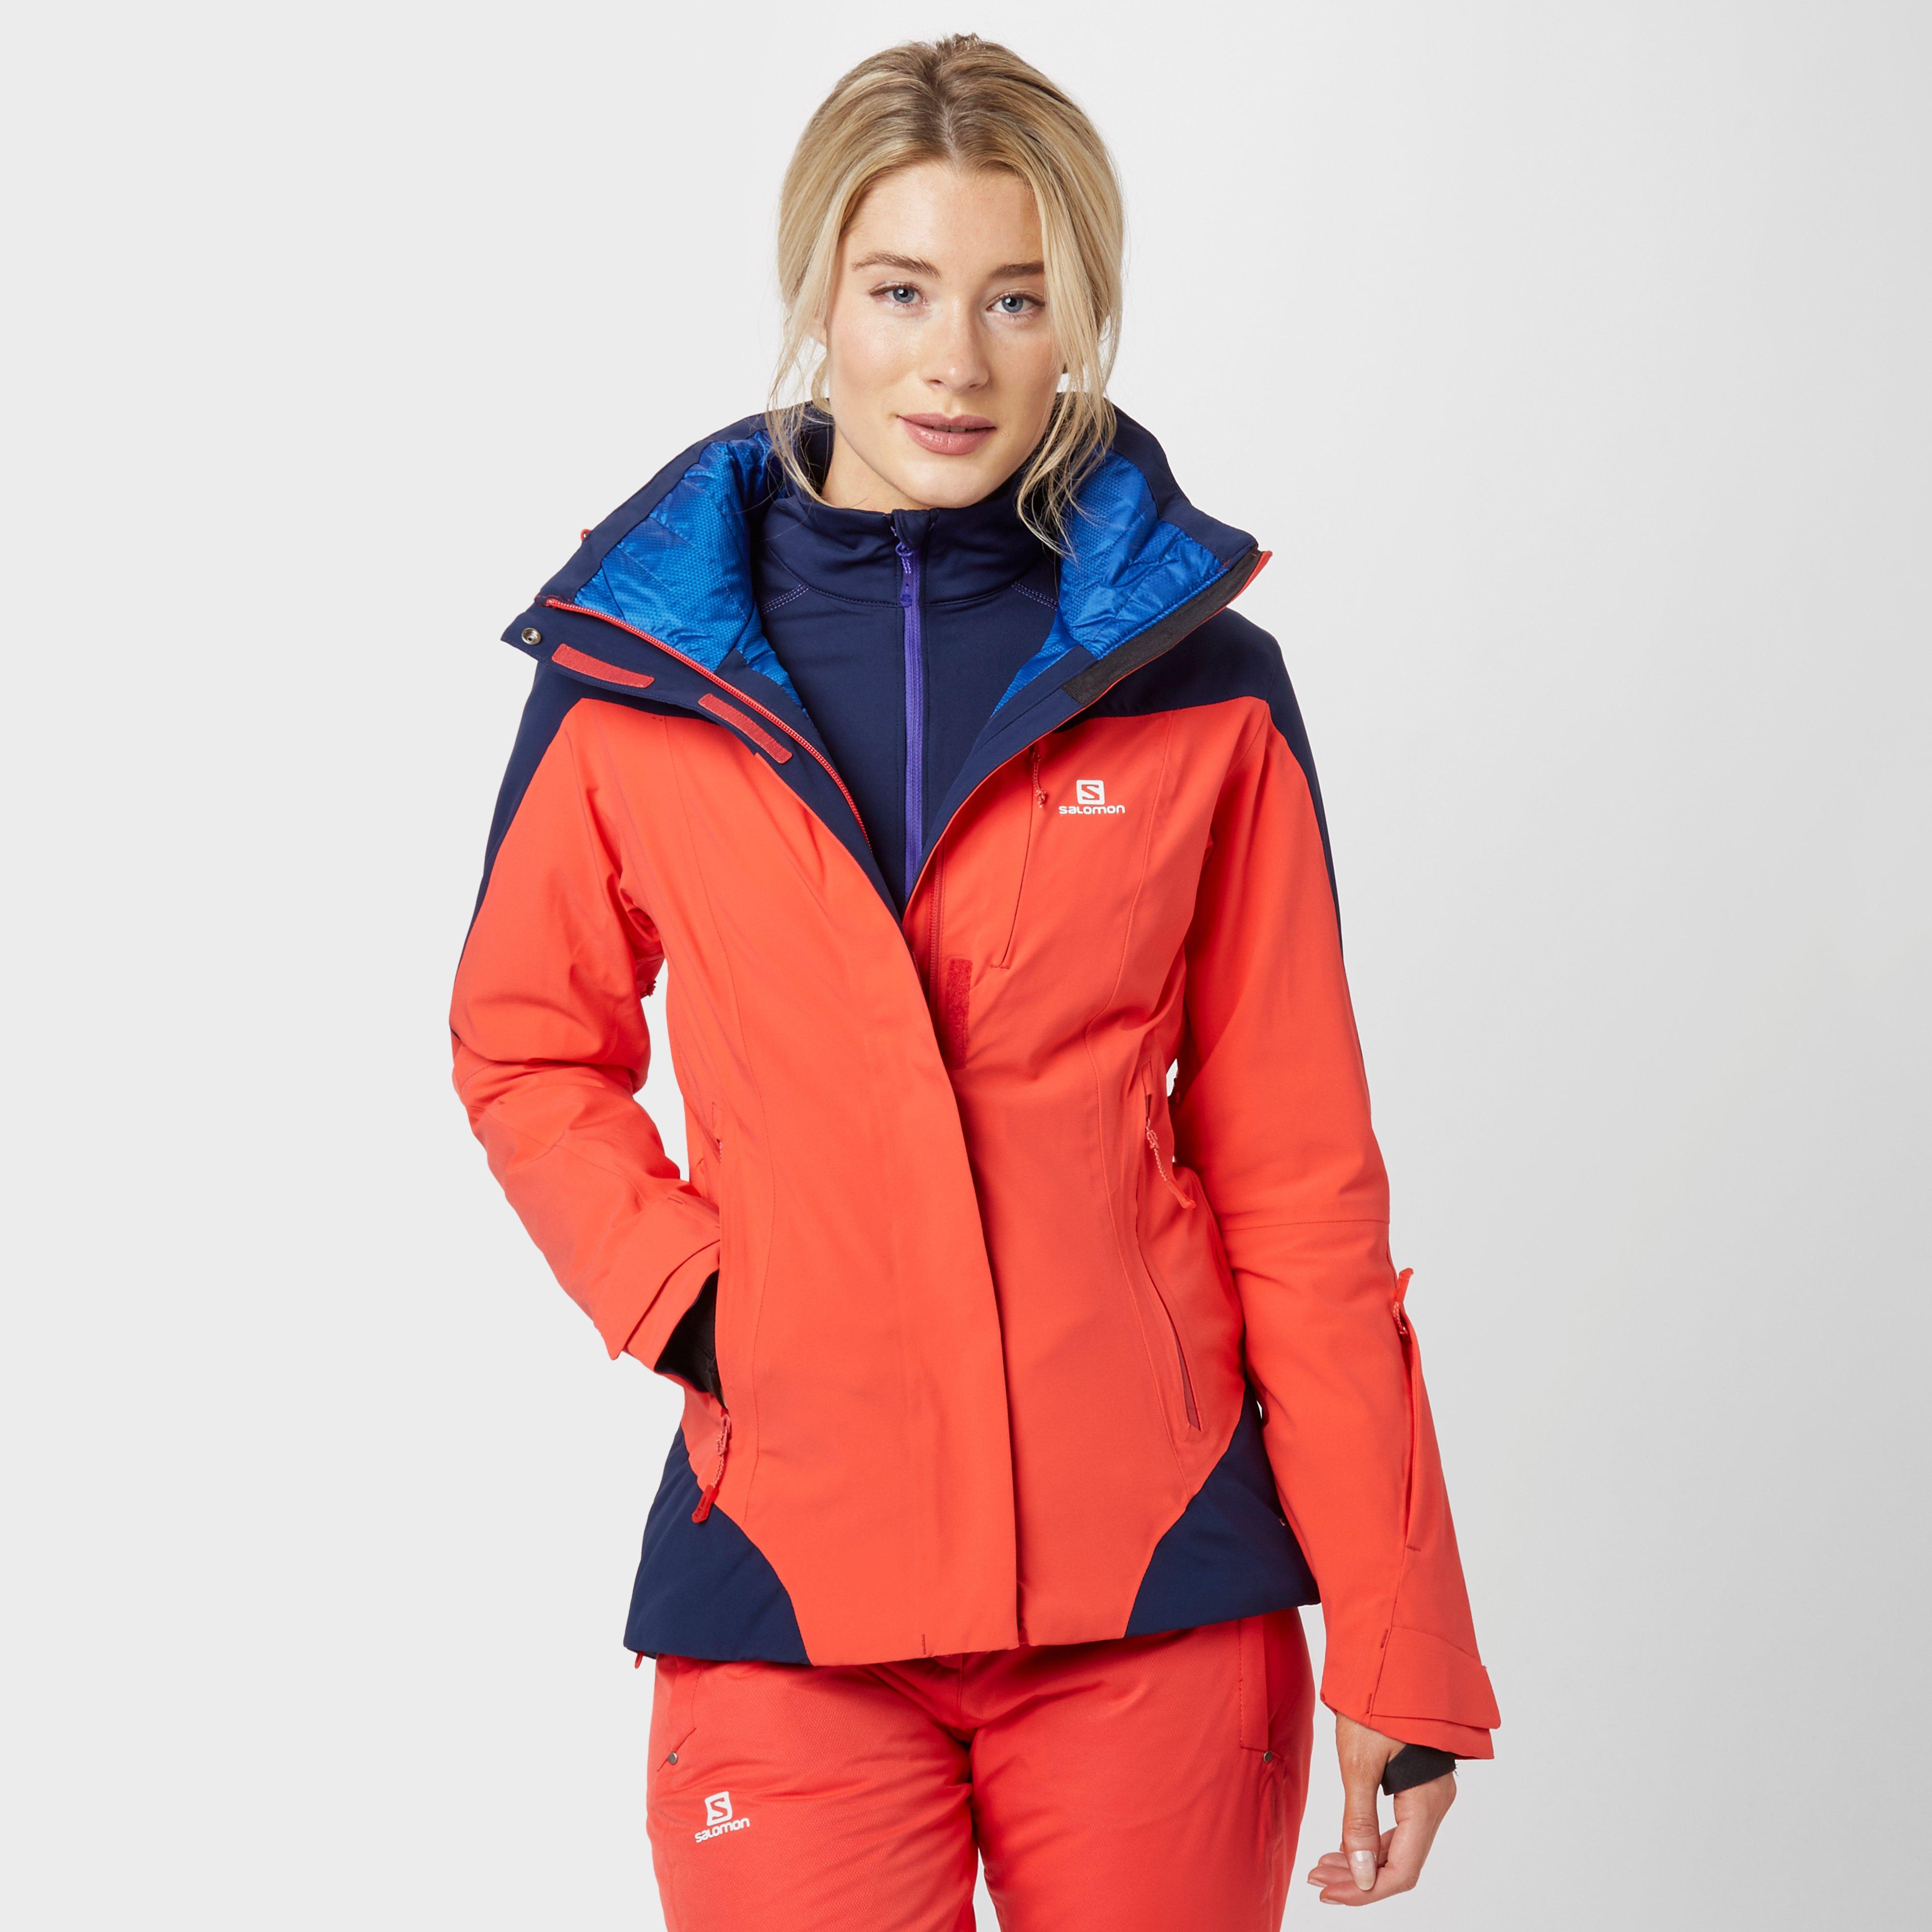 Salomon Women’s Icerocket Ski Jacket